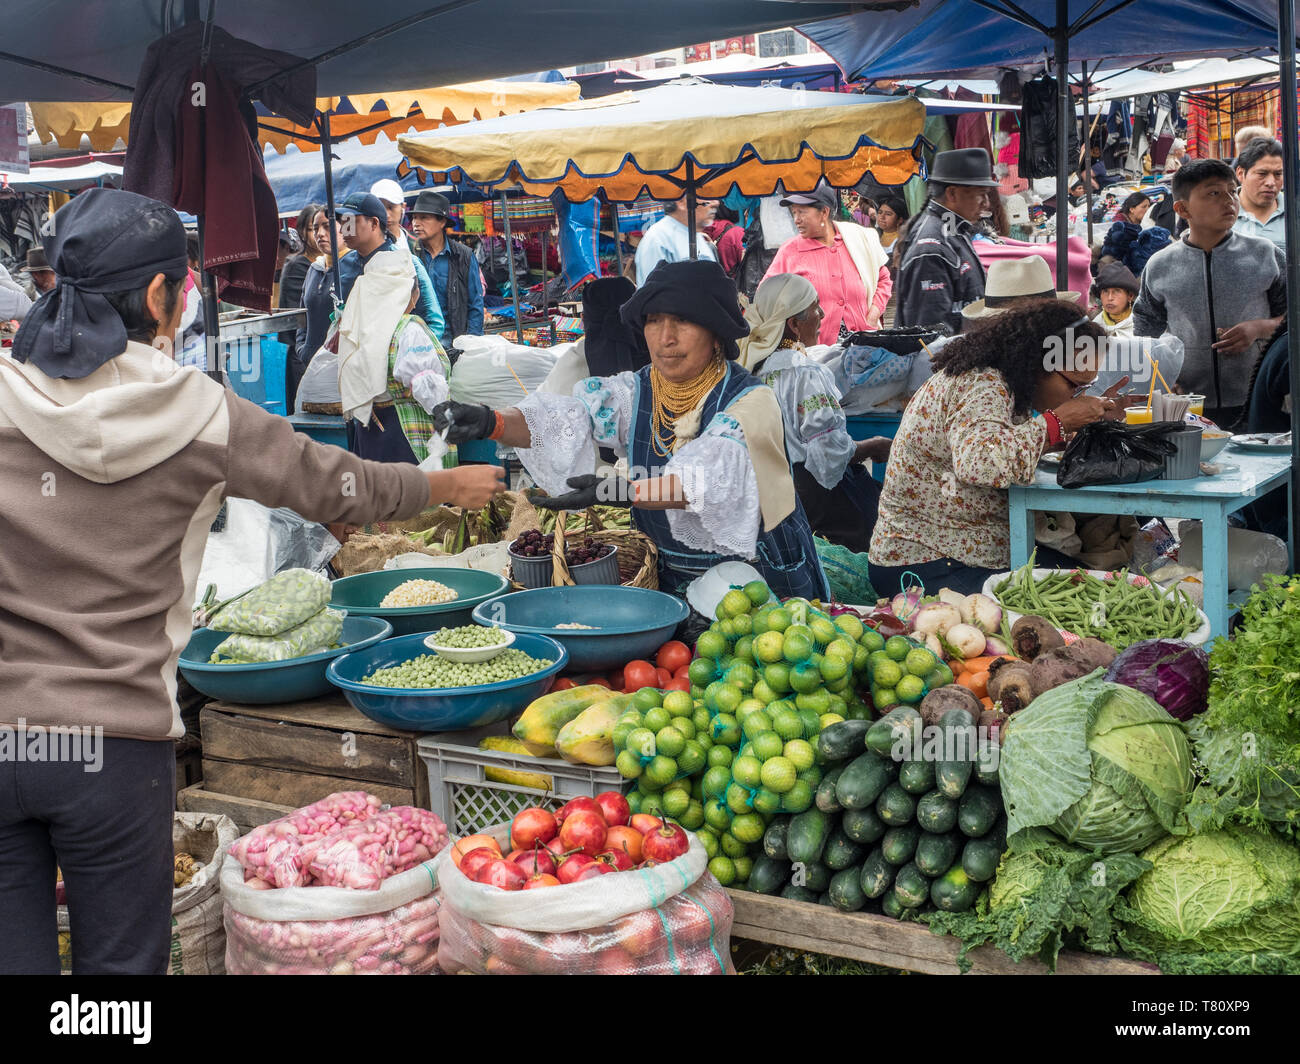 Produce for sale, market, Plaza de los Ponchos, Otavalo, Ecuador, South America Stock Photo